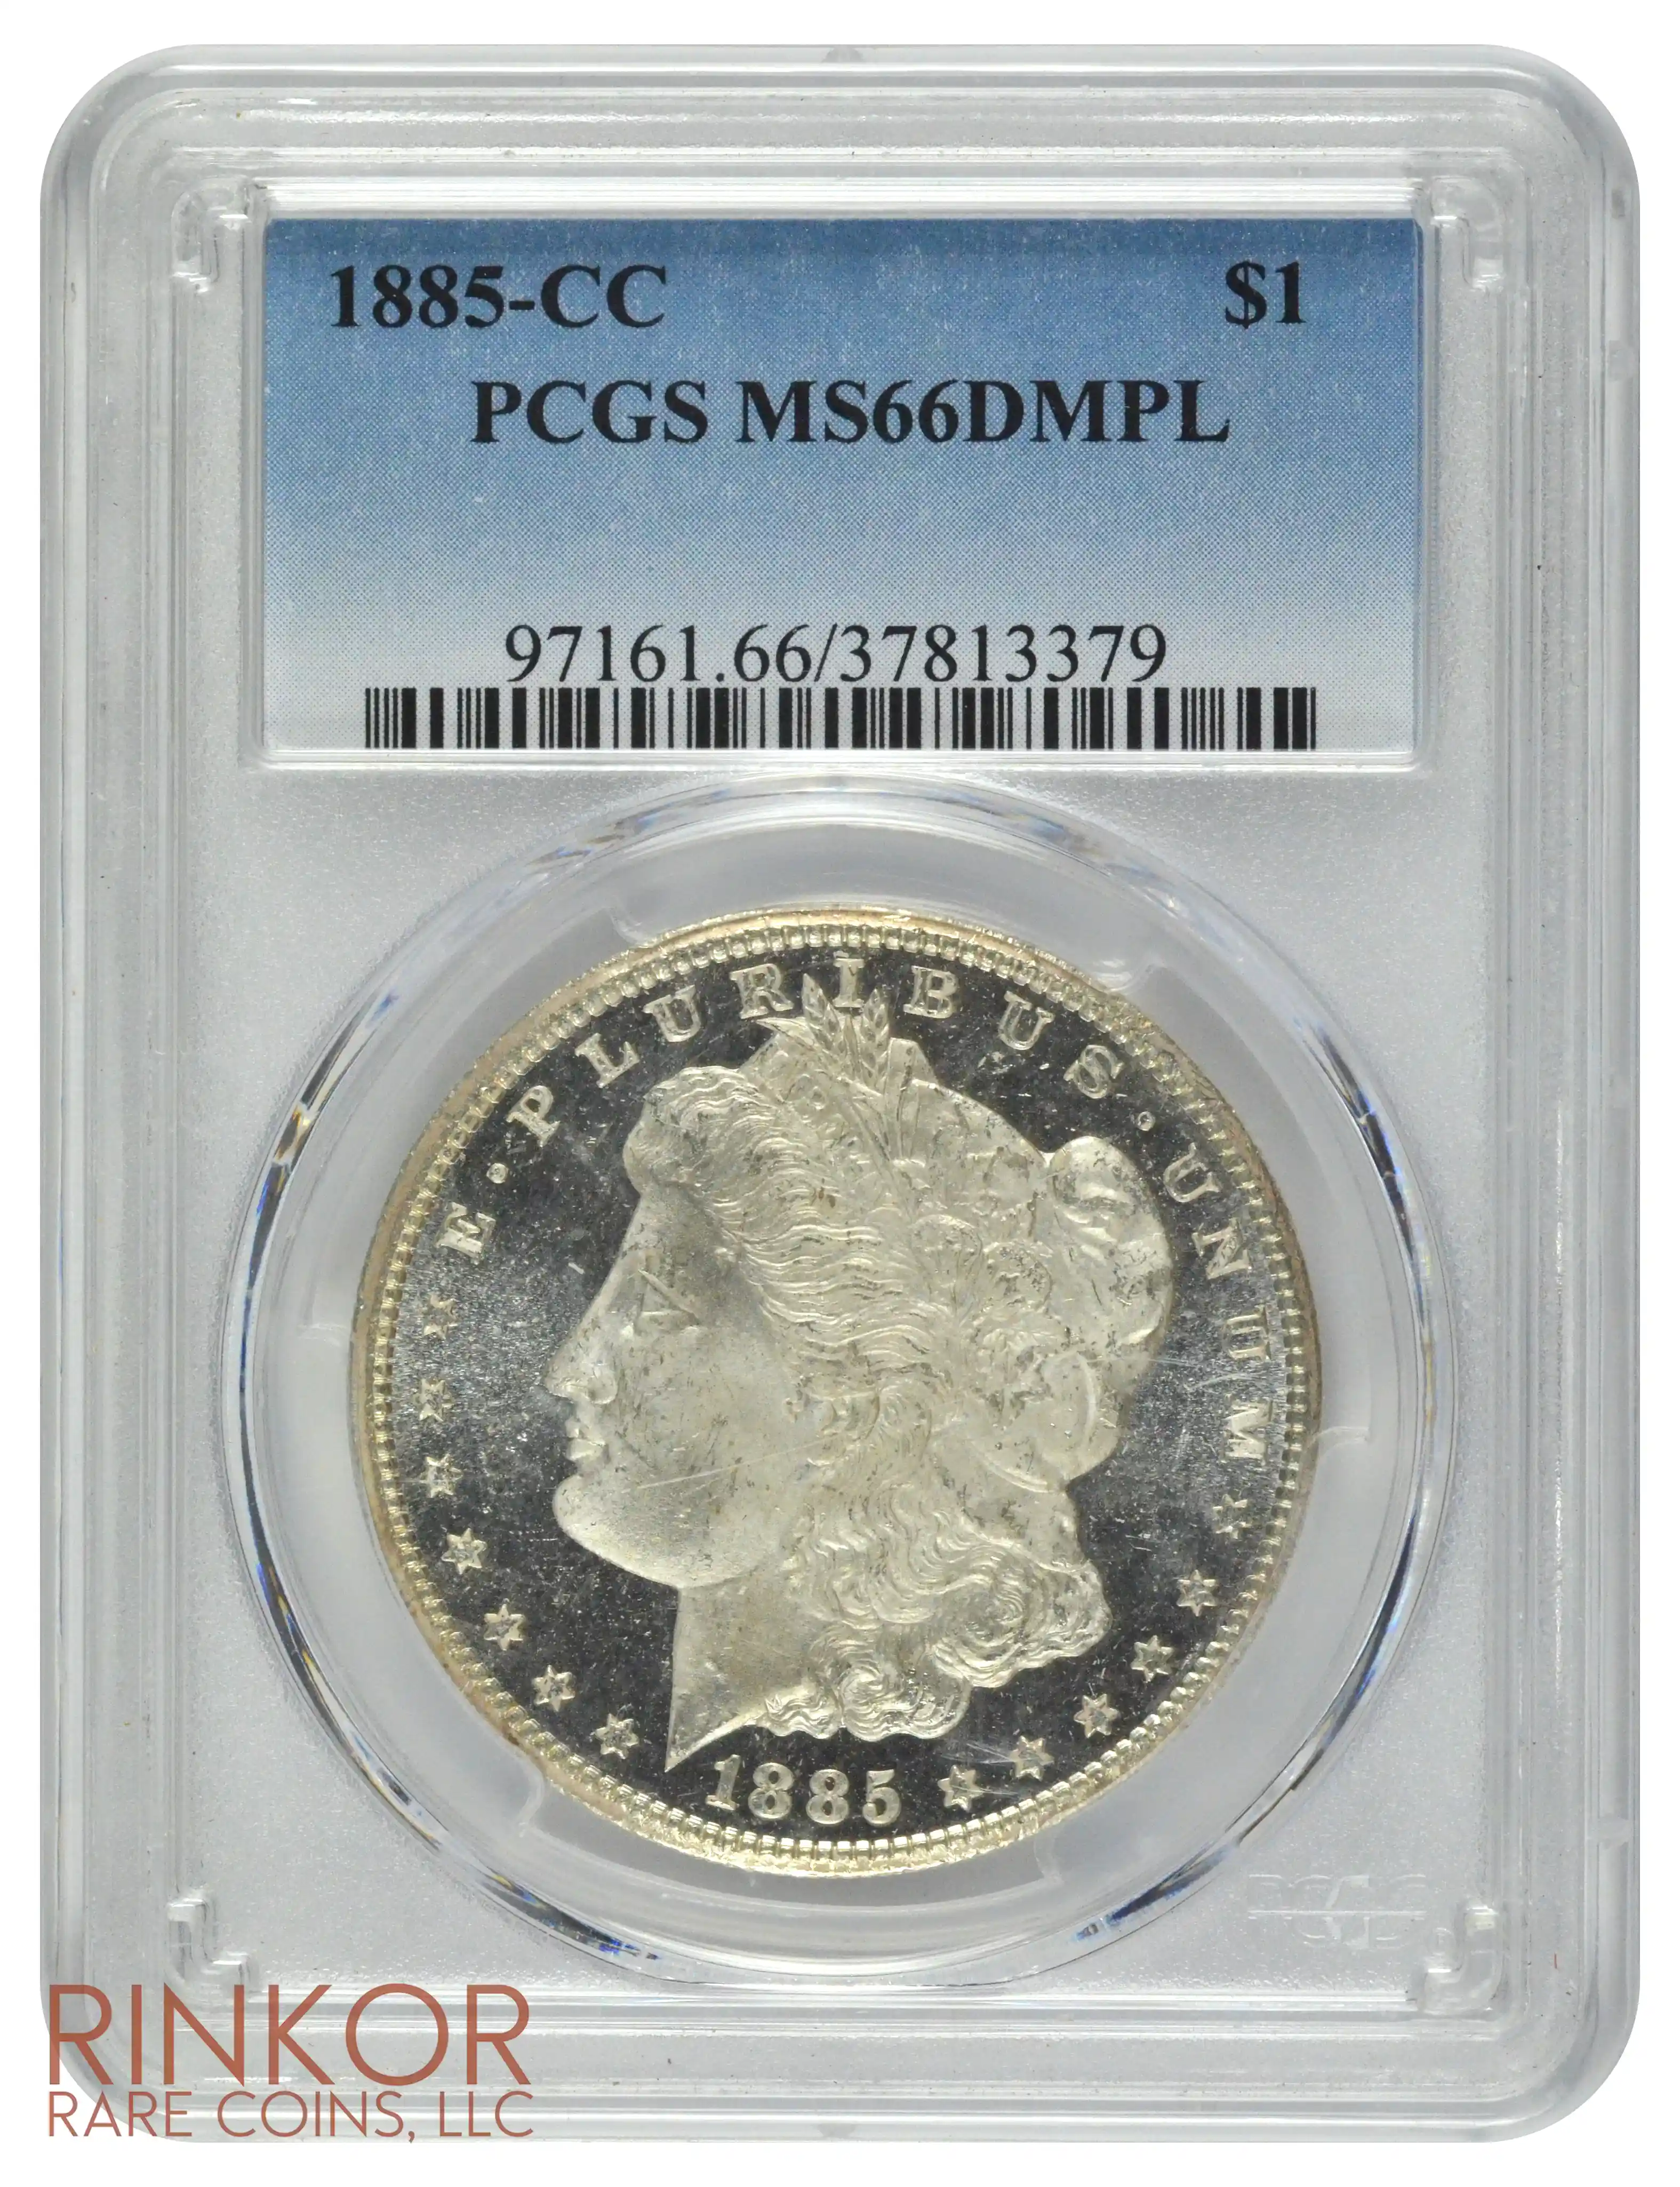 1885-CC $1 PCGS MS 66 DMPL 